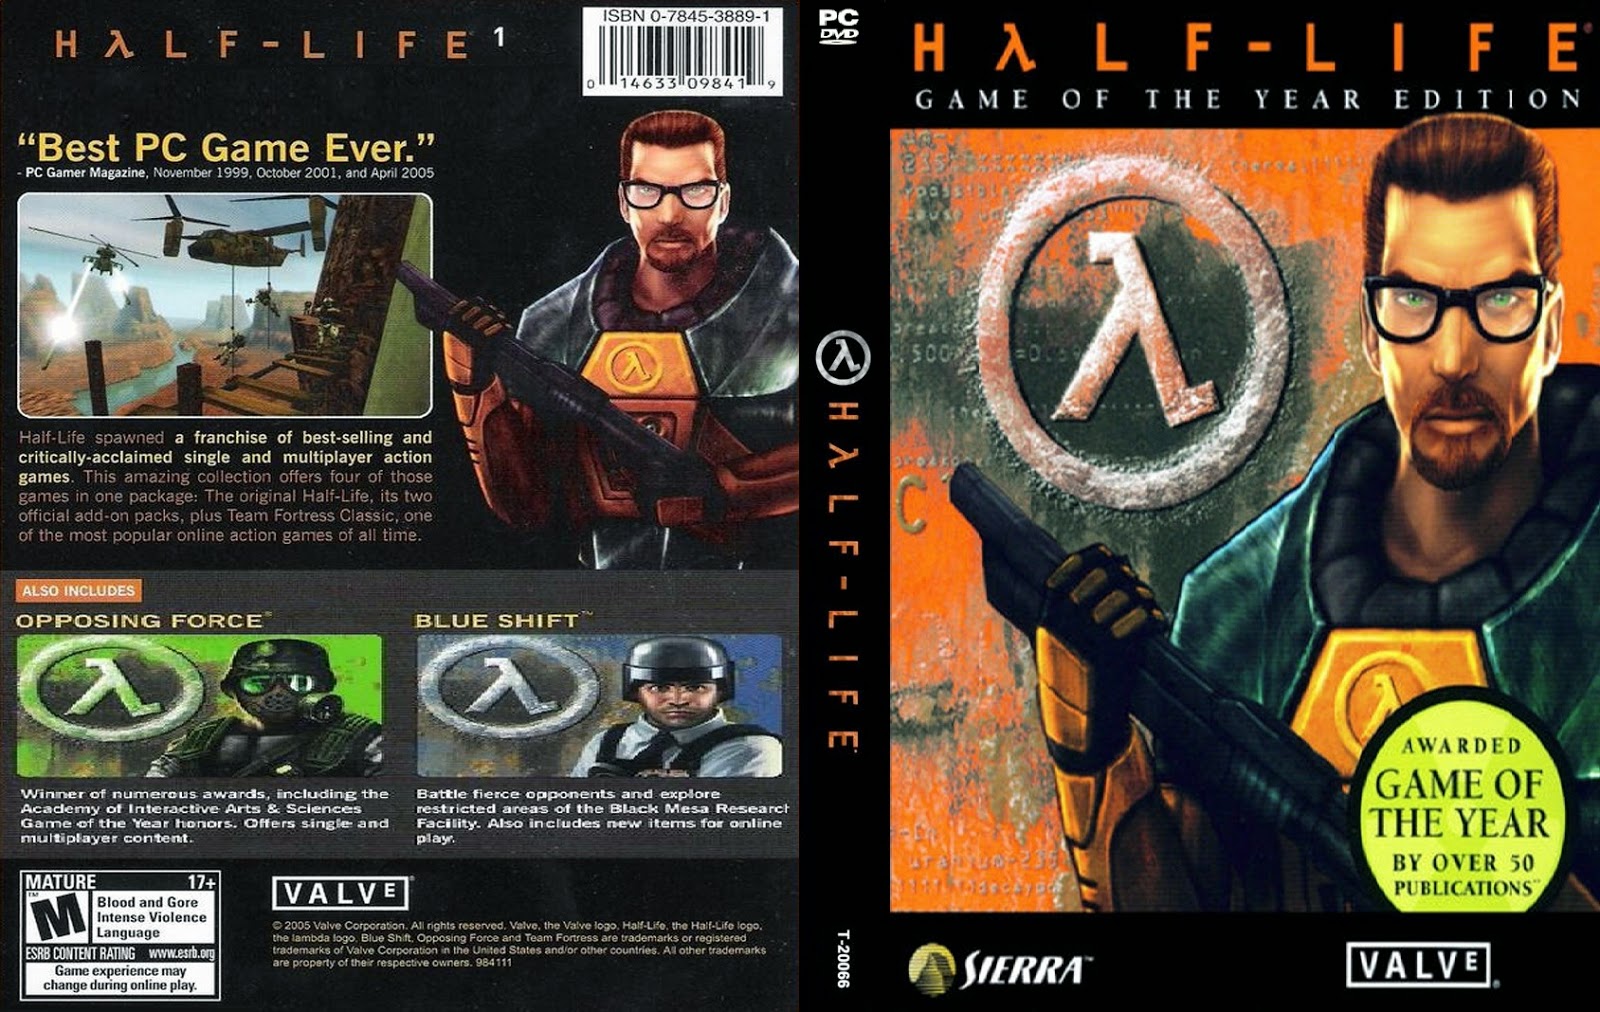 Half life список. Half Life 1 обложка. Half Life 1998 обложка. Half Life 1 обложка 1998 диск. PC Gamer 1999 обложка half-Life.